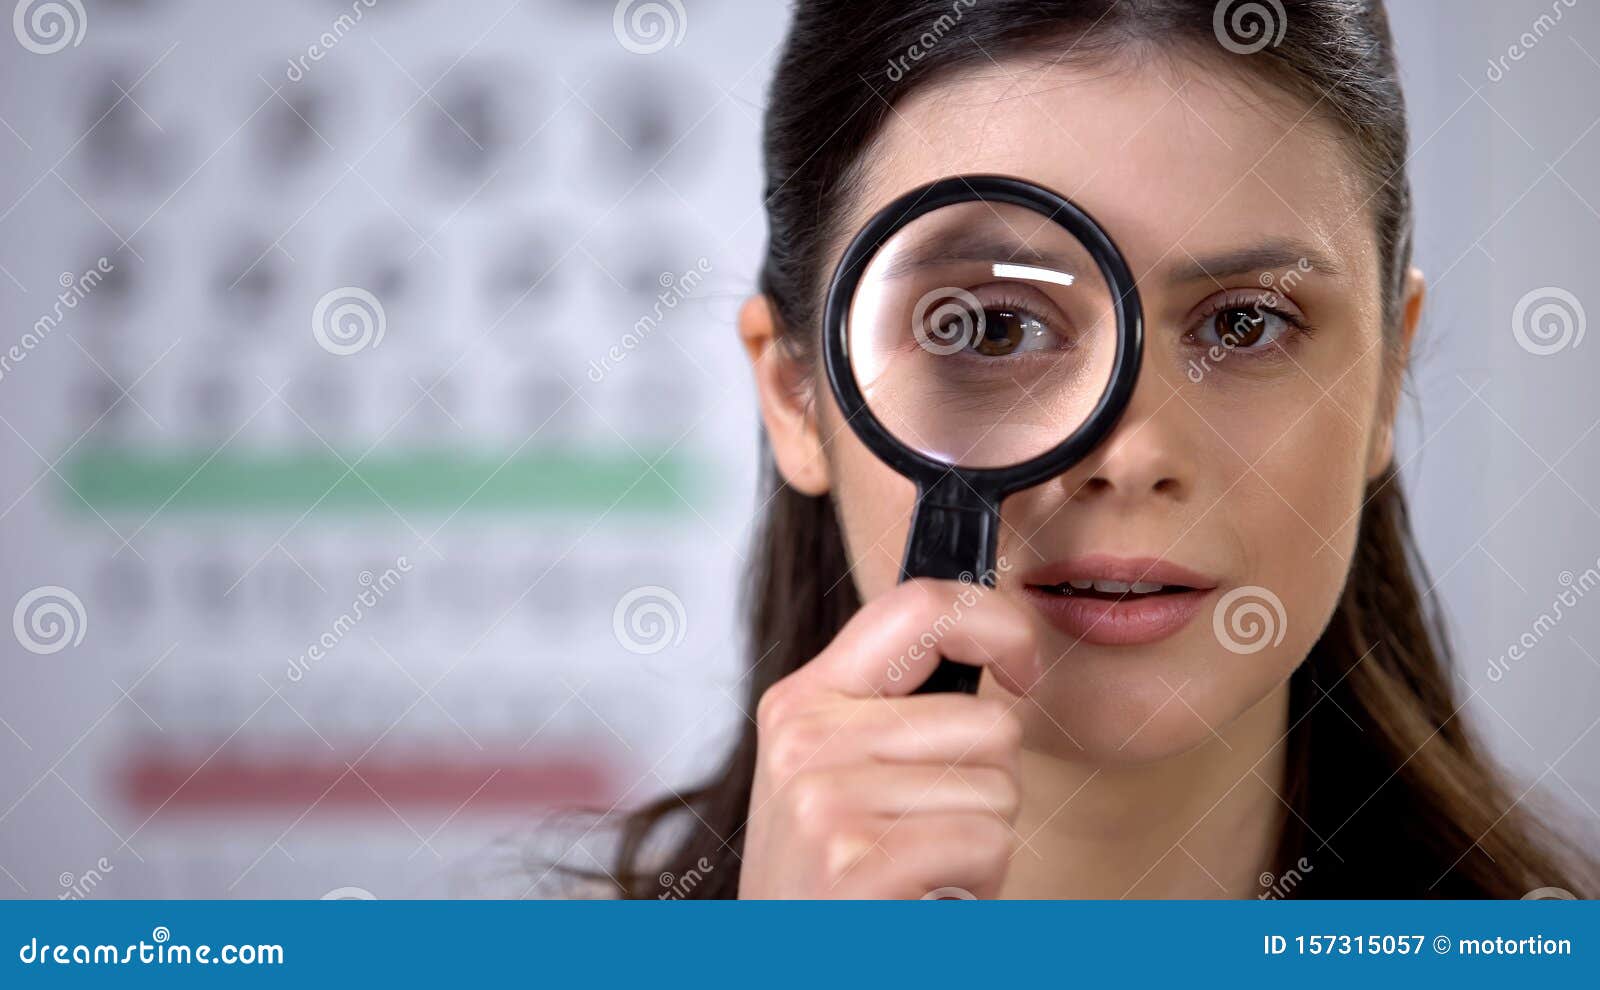 smiling lady looking through magnifying glass, eye cornea genetics, treatment